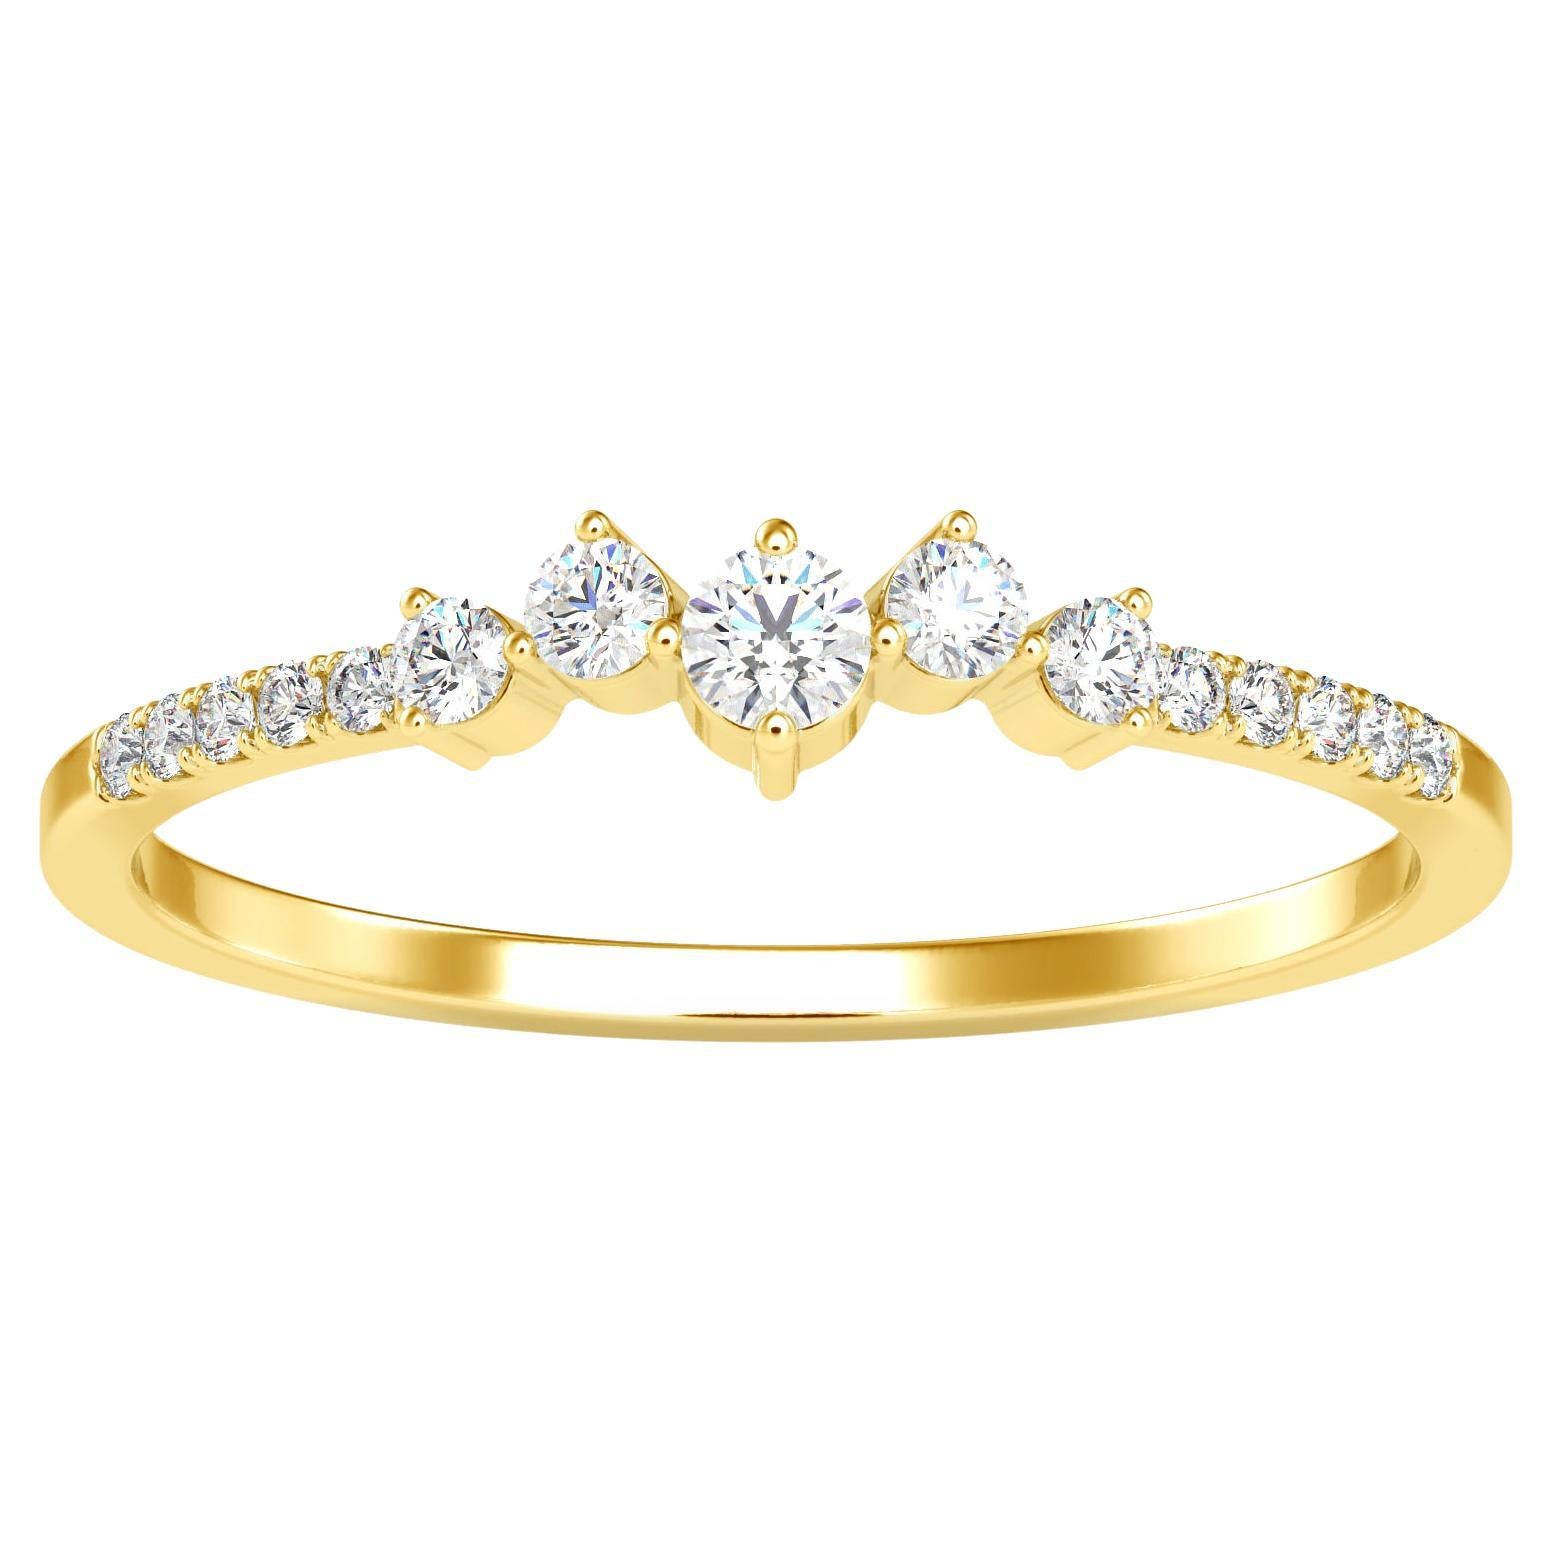 0.16 Carat Diamond 14K Yellow Gold Ring